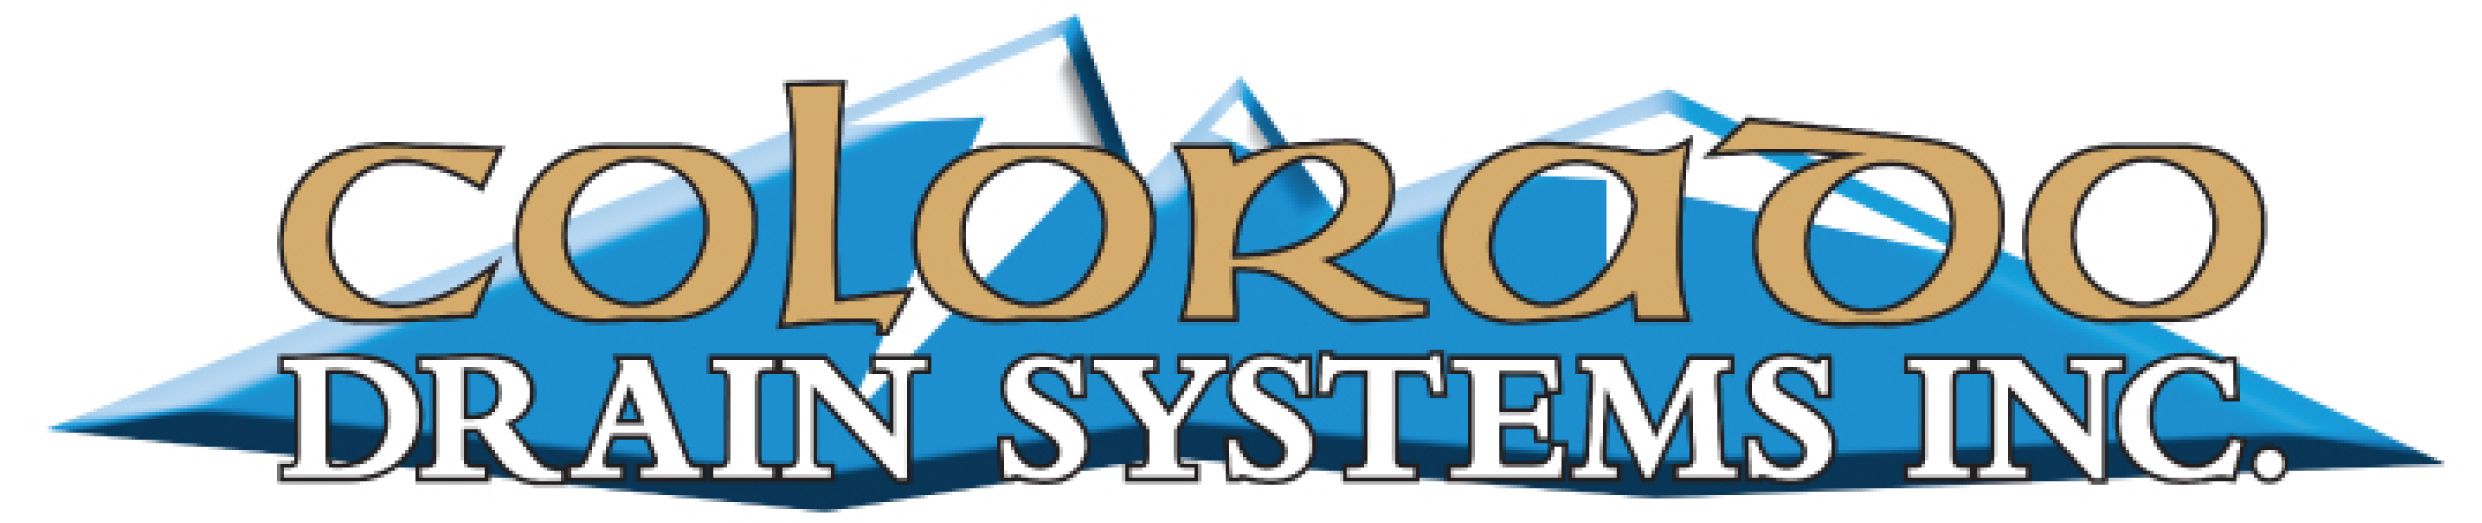 Colorado Drain Systems, Inc. Logo